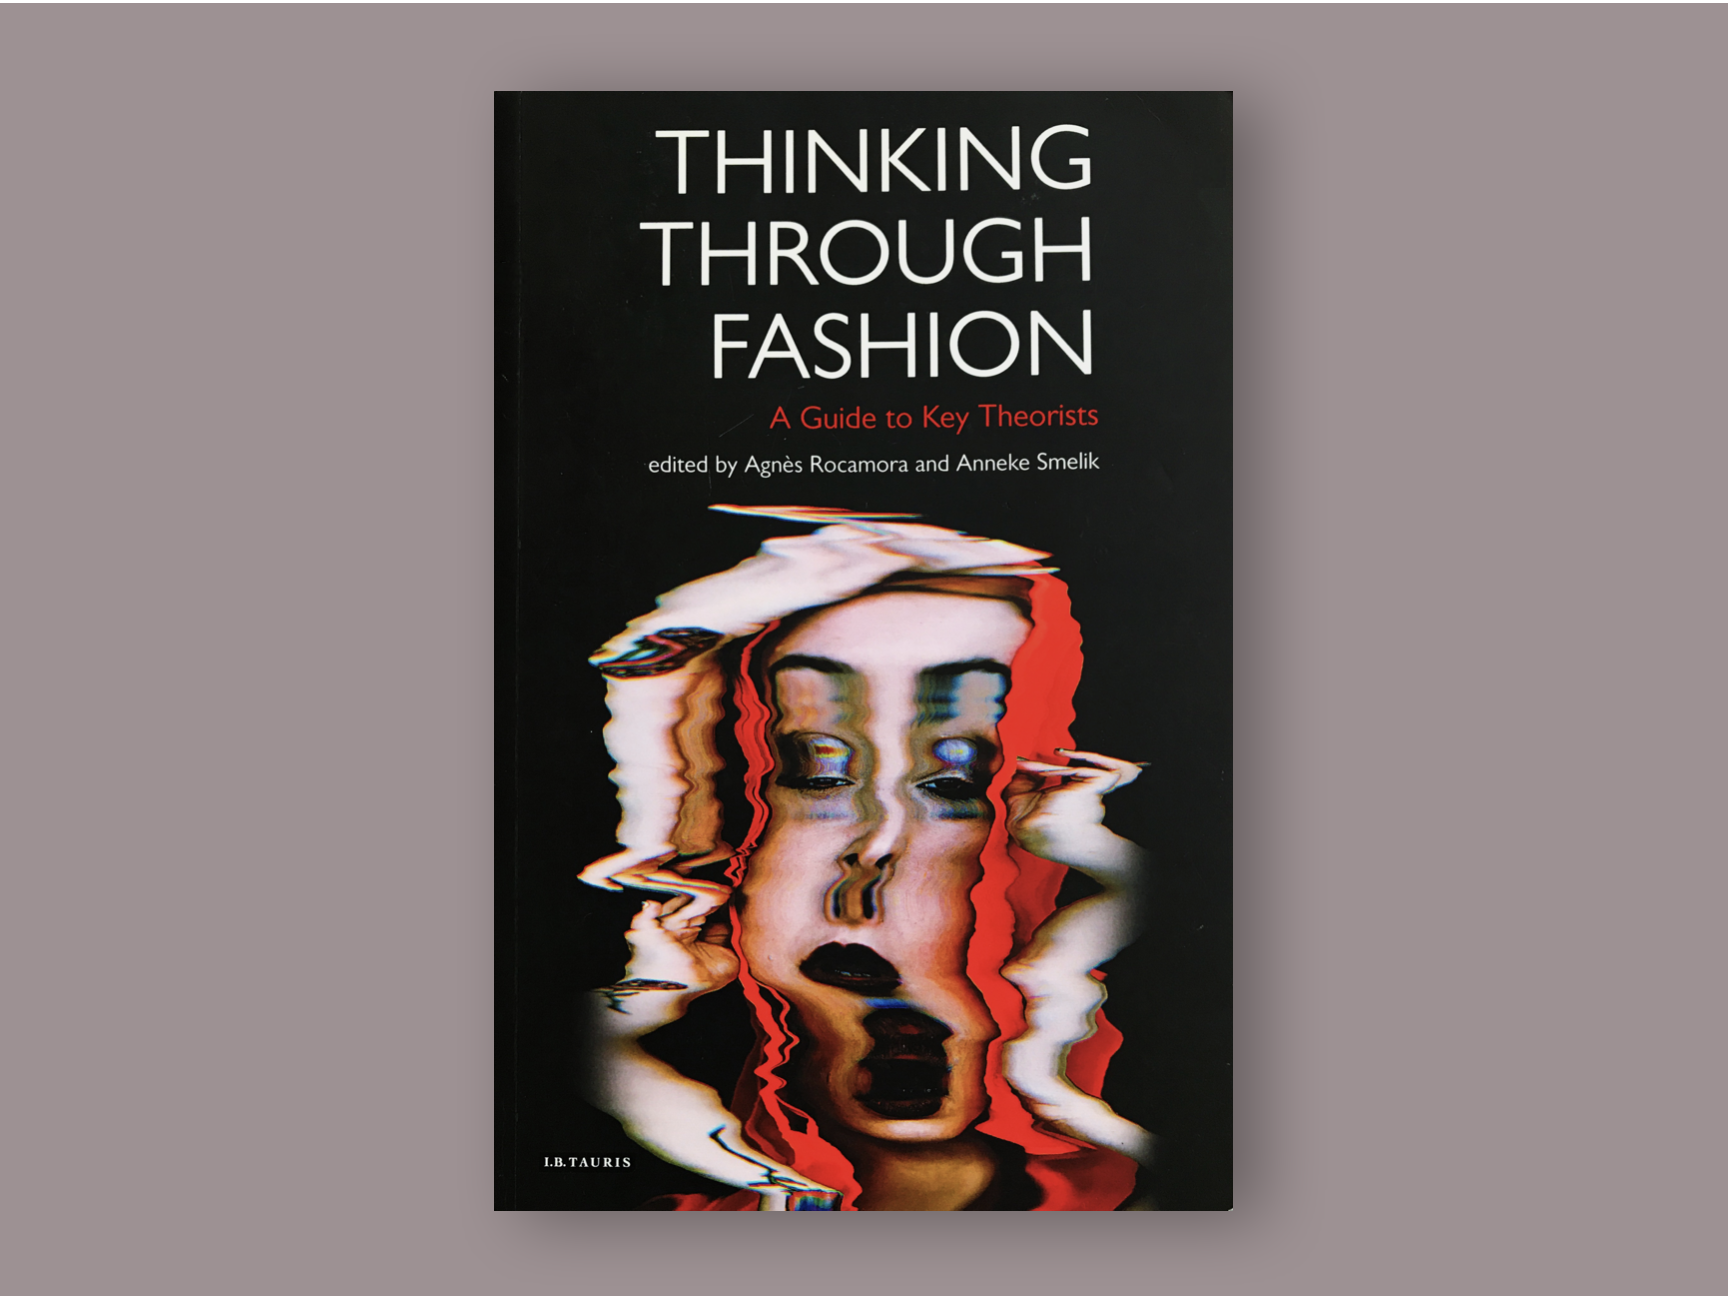 Thinking Through Fashion Image.png